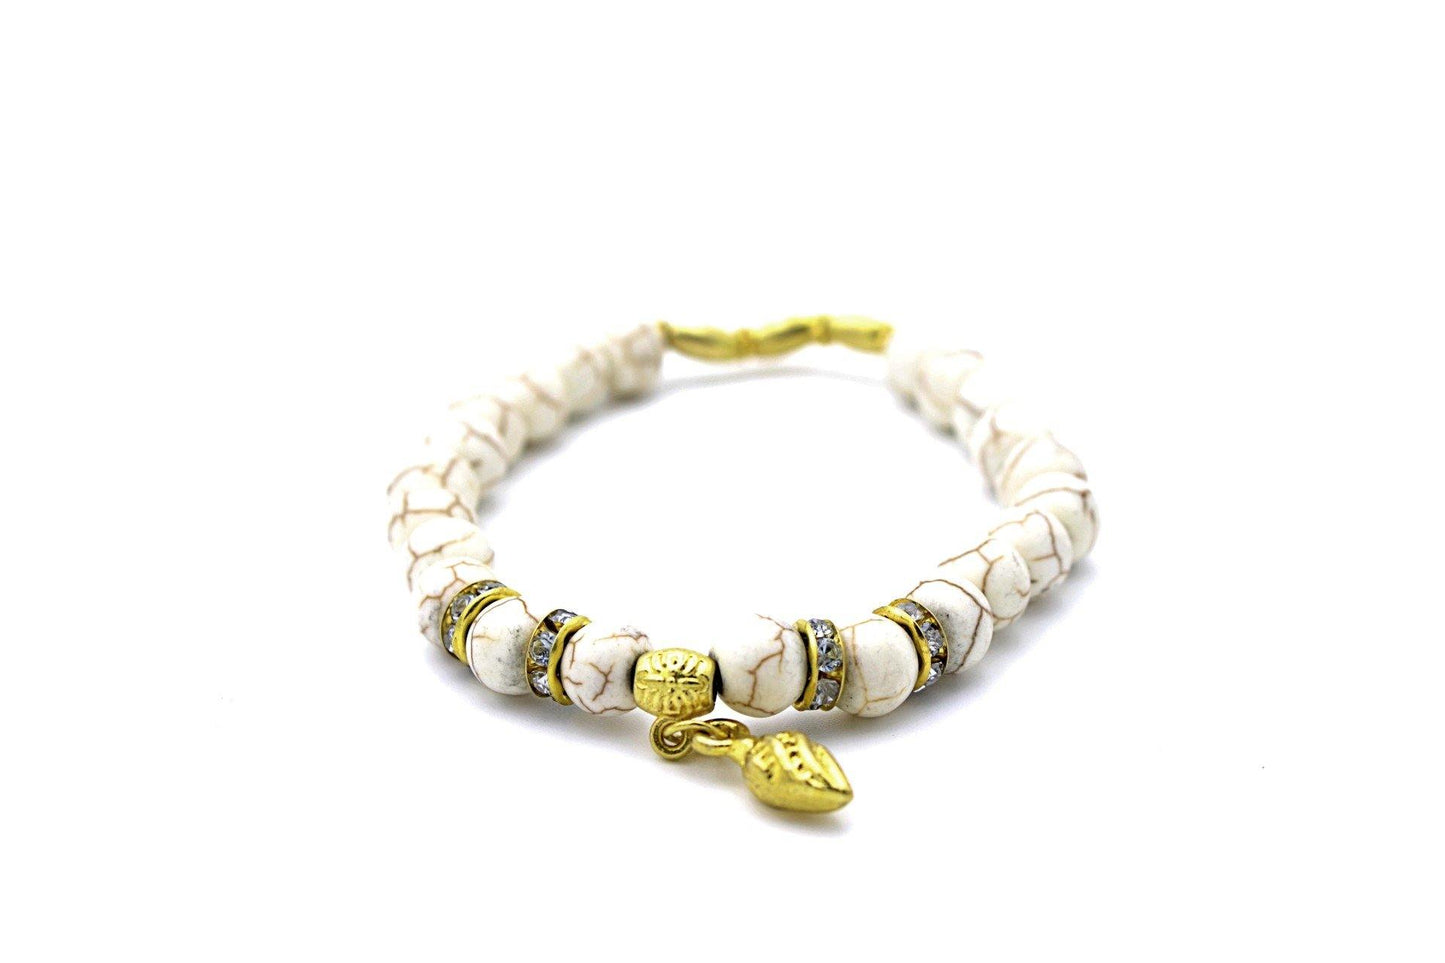 howlite bracelets uk luxury r visible jewelery